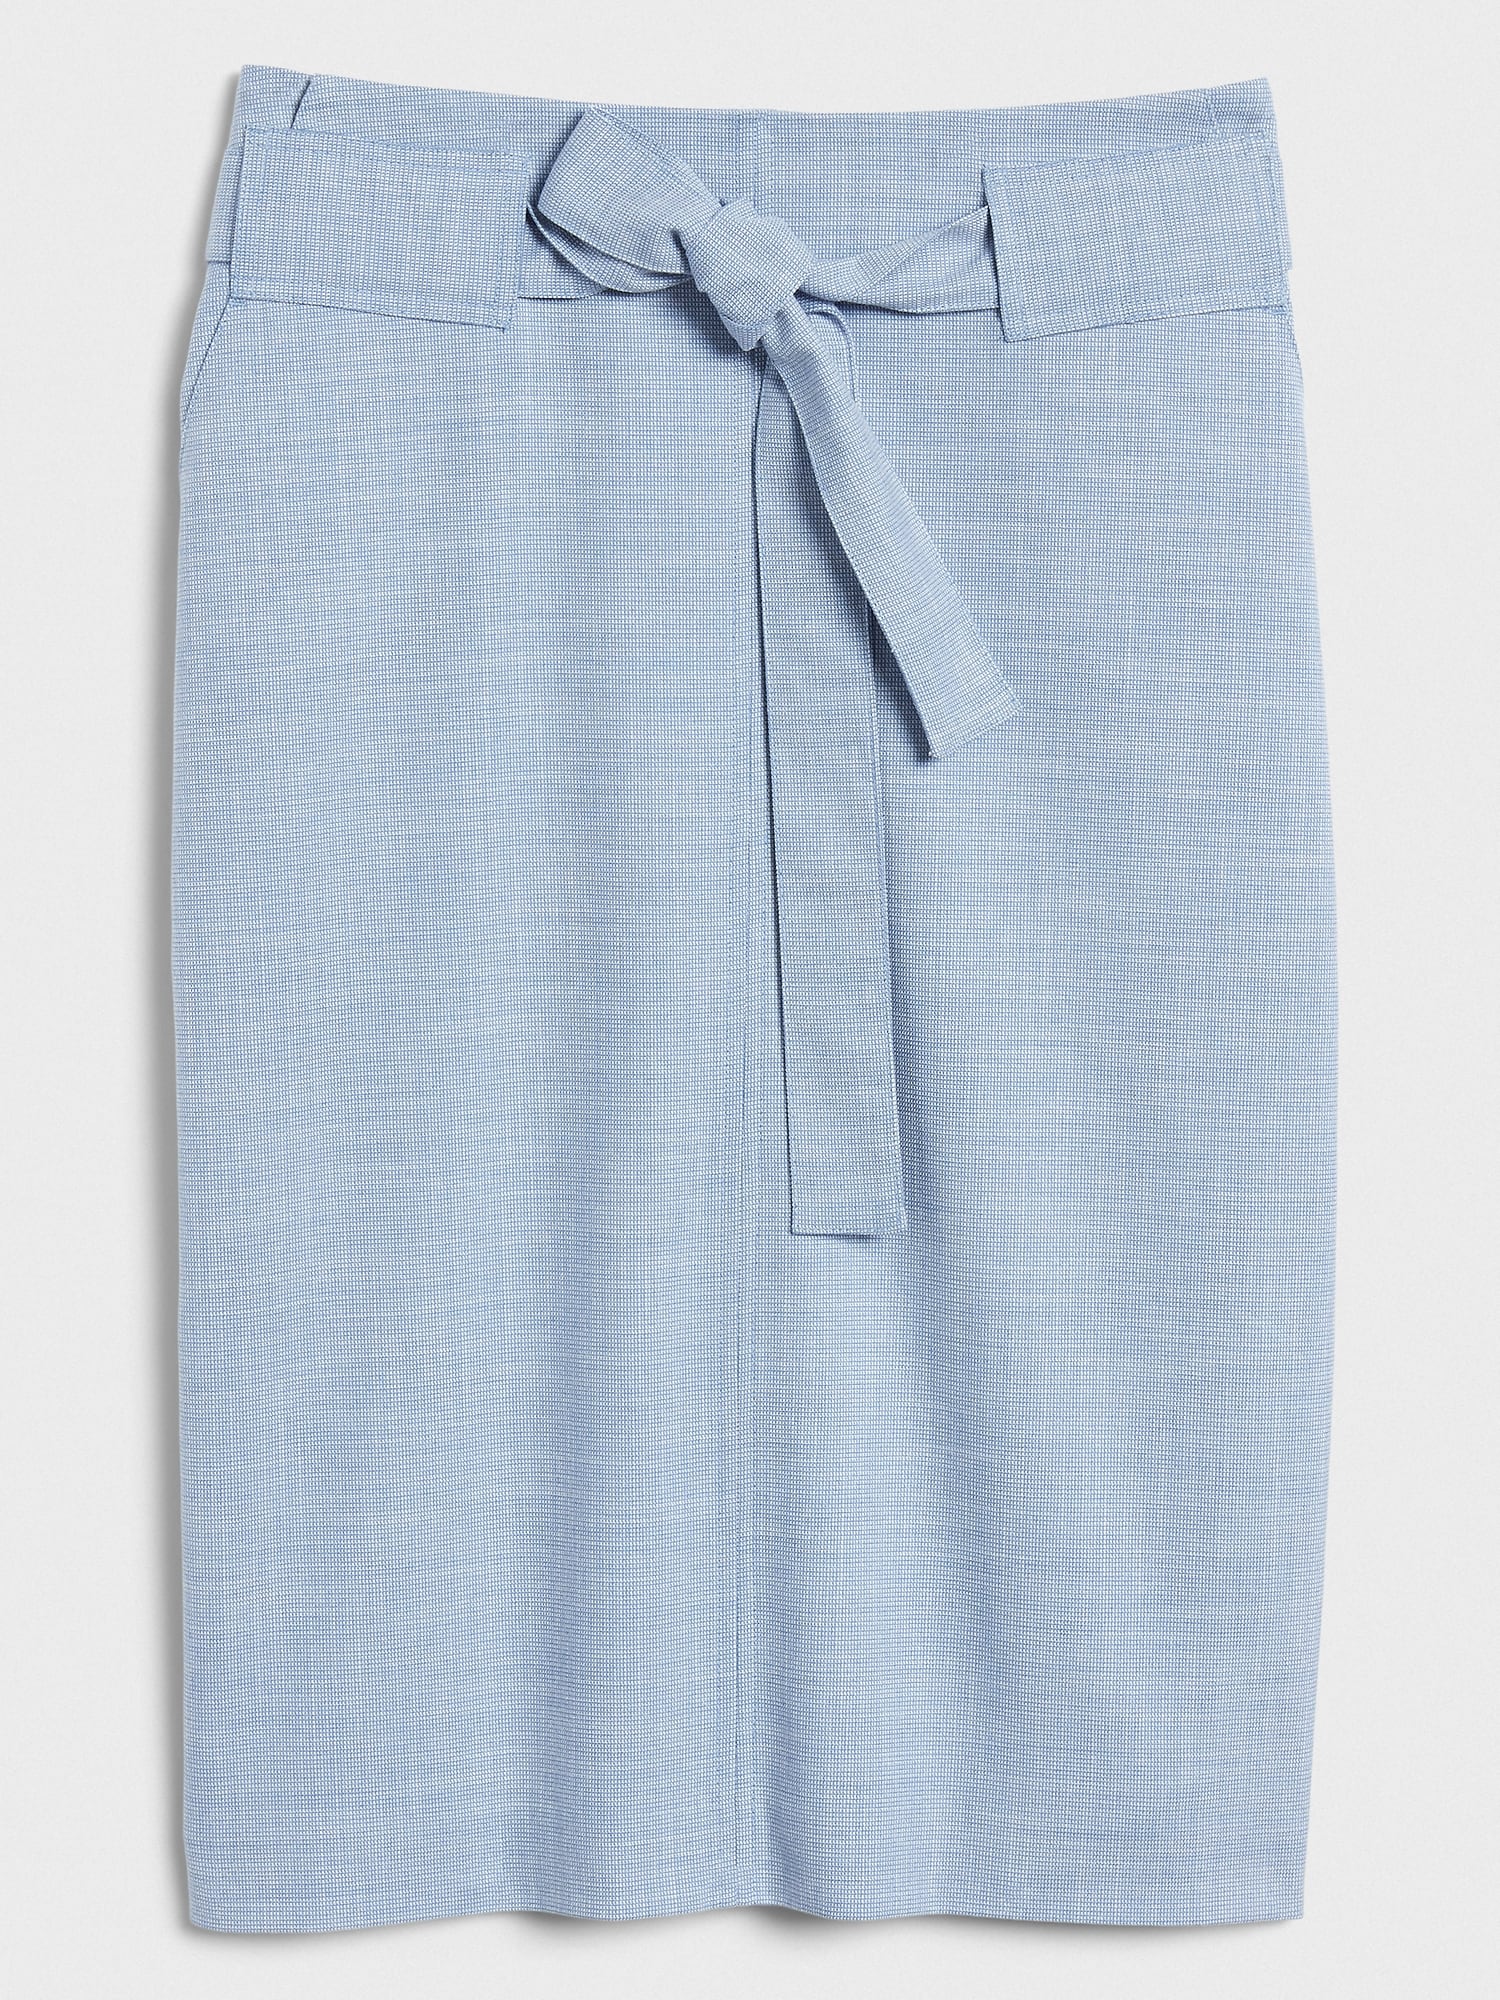 Chambray Tie-Waist Pencil Skirt